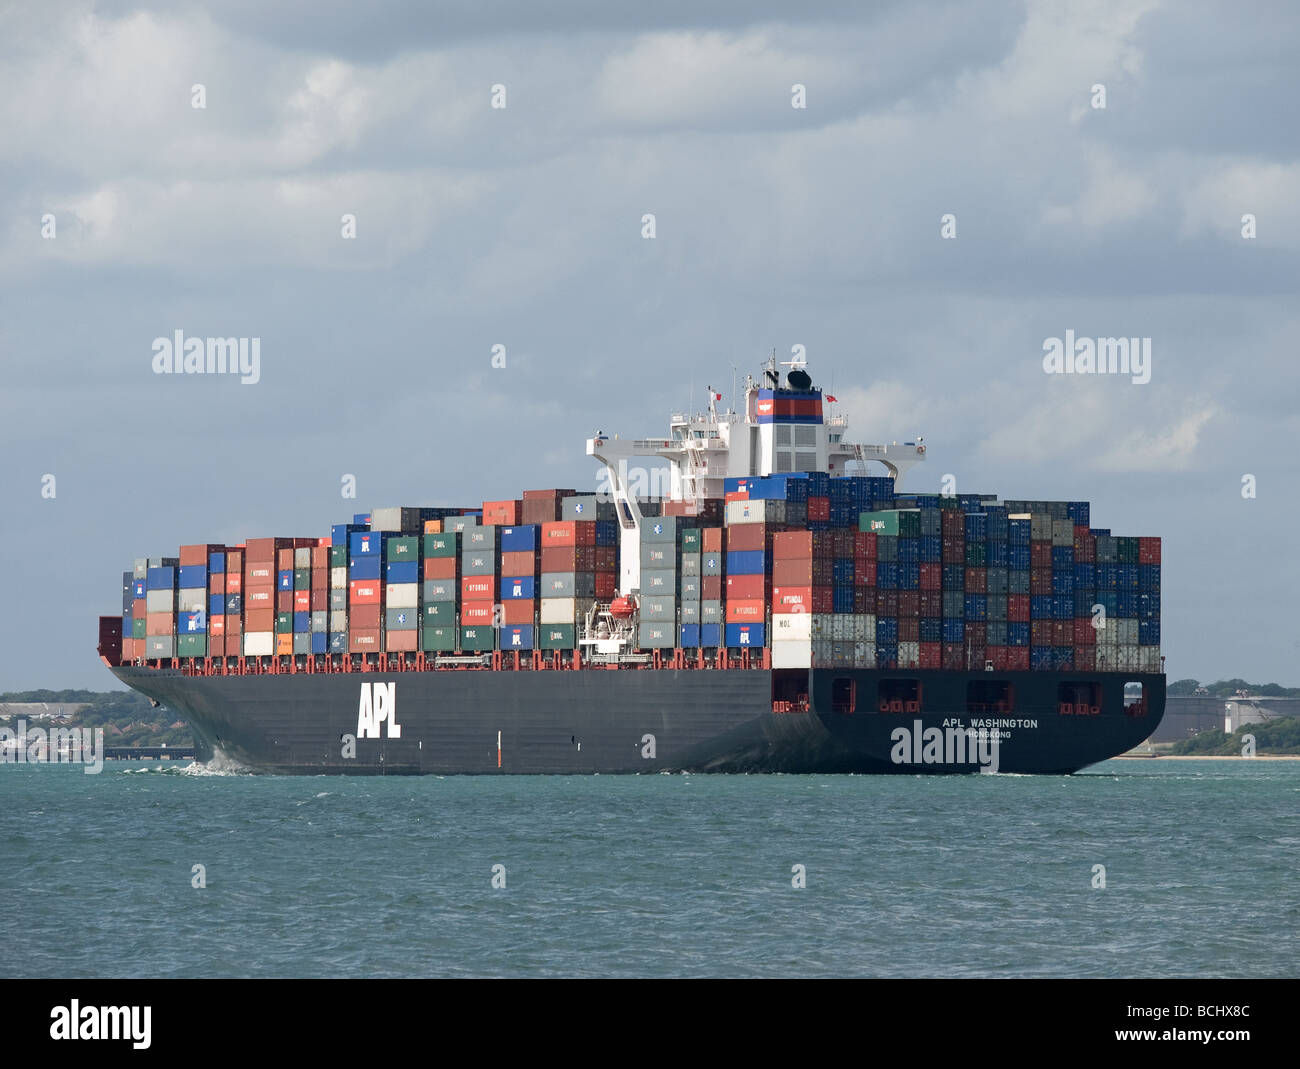 Container ship APL Washington arriving at Southampton UK Stock Photo